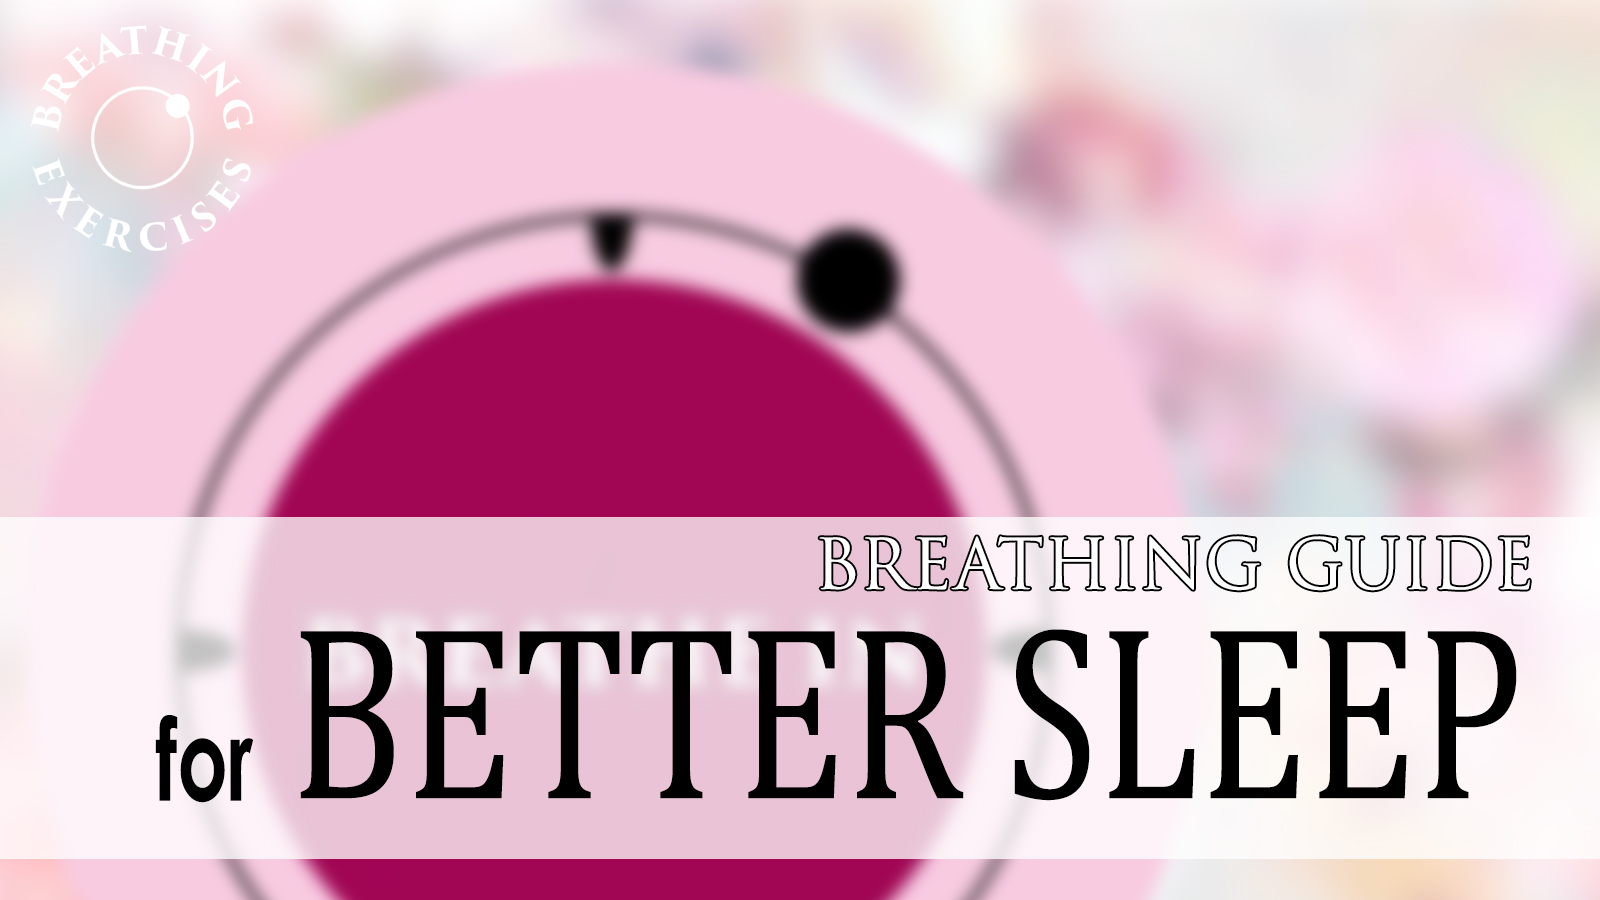 Better sleep exercise